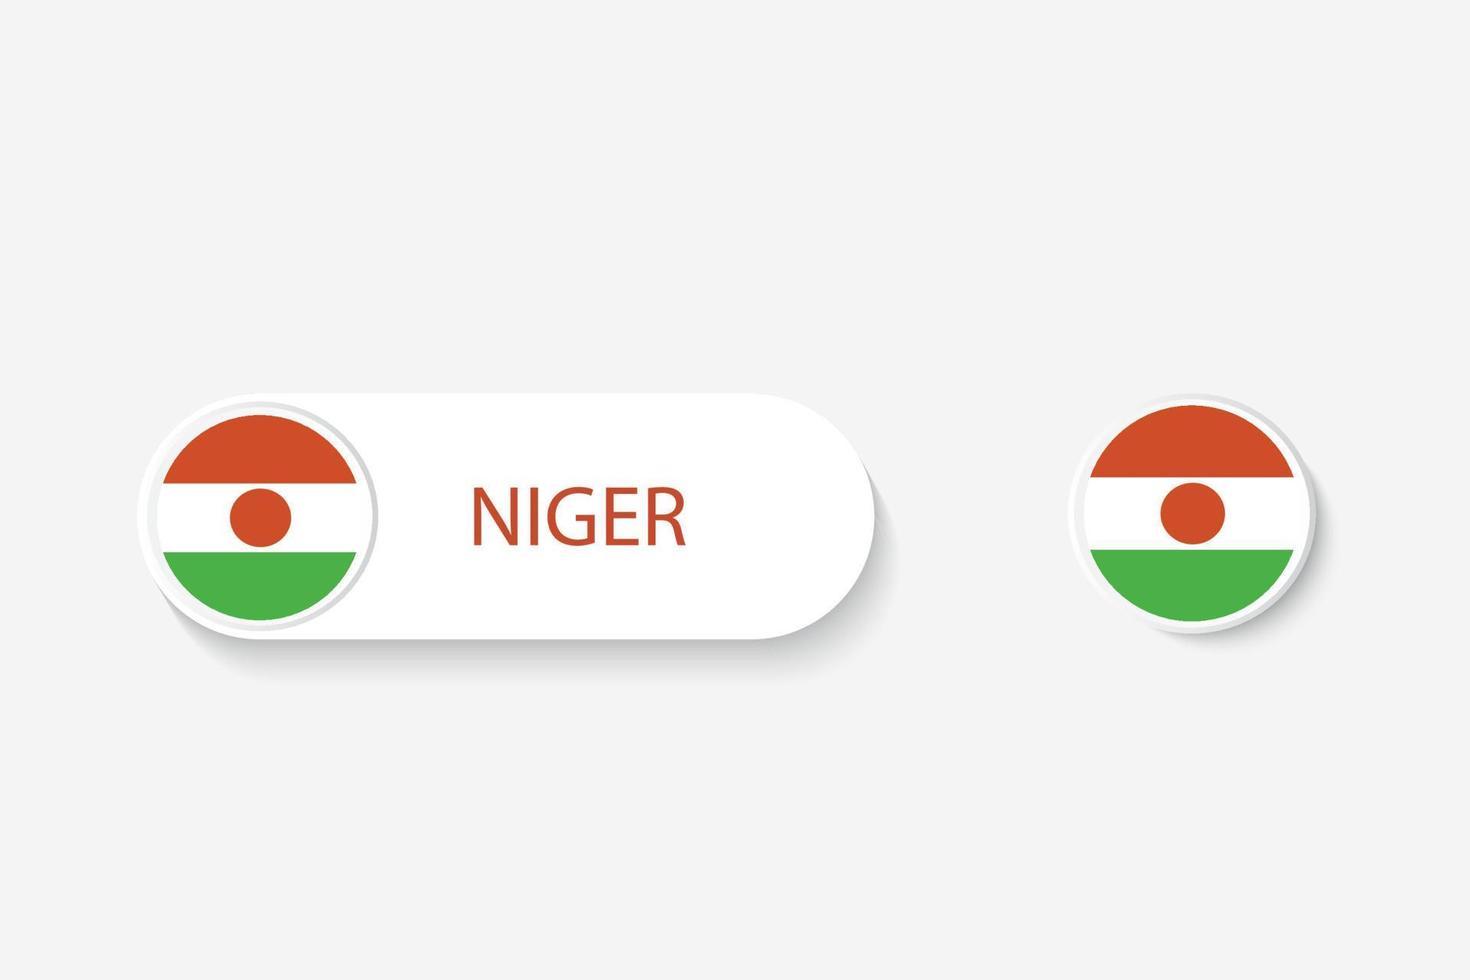 niger knop vlag in illustratie van ovaal gevormd met woord niger. en knop vlag niger. vector